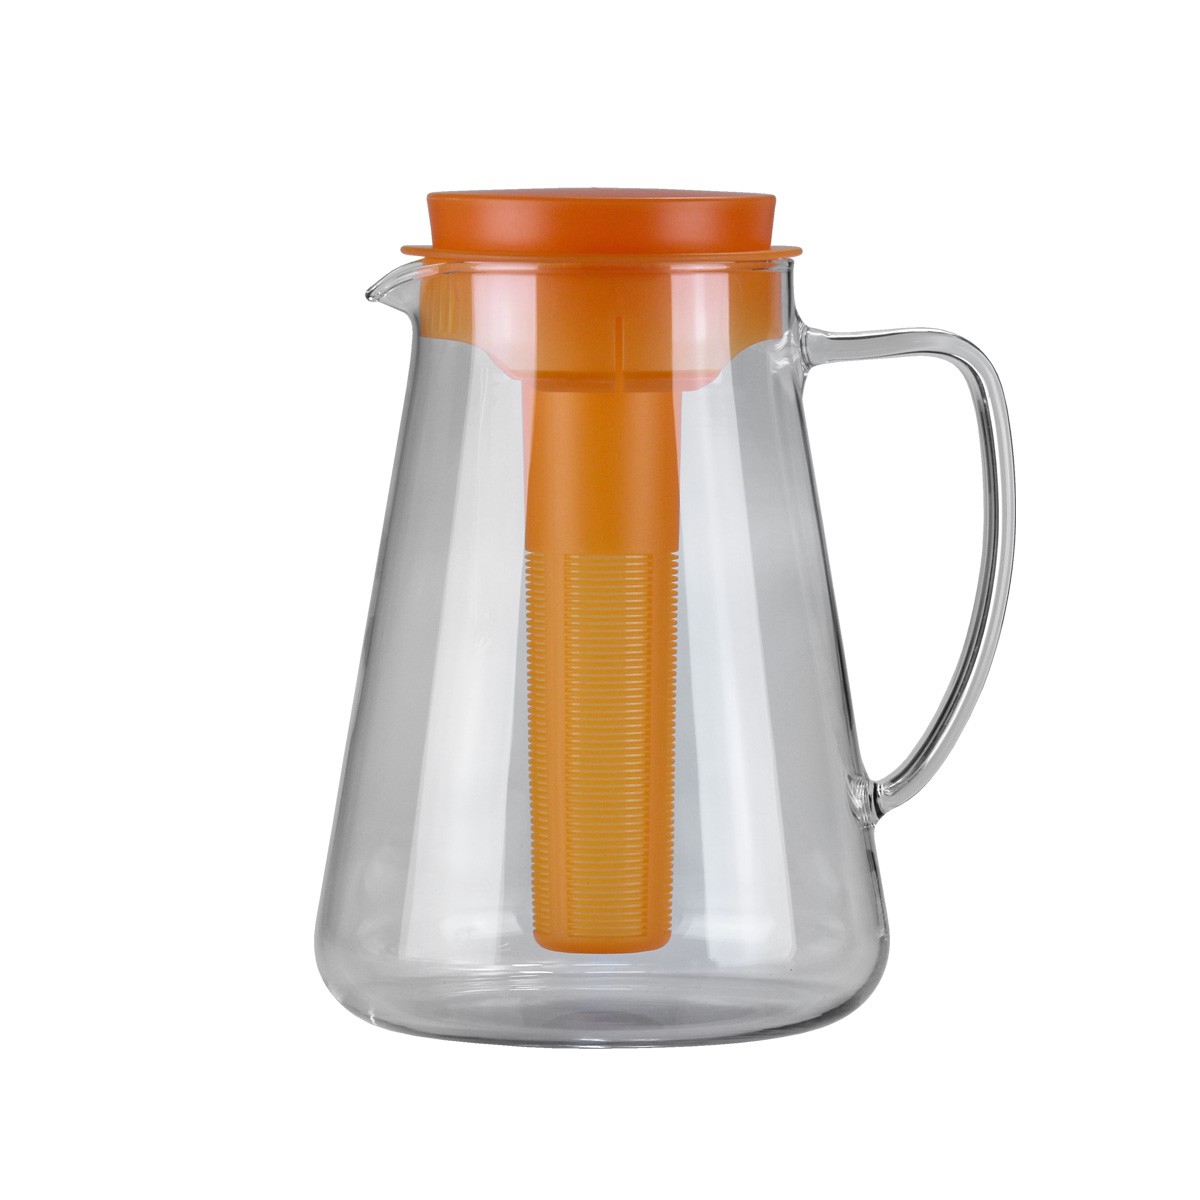 Glaskrug TEO 2.5 l, mit Teesieb und Kühleinsatz , orange